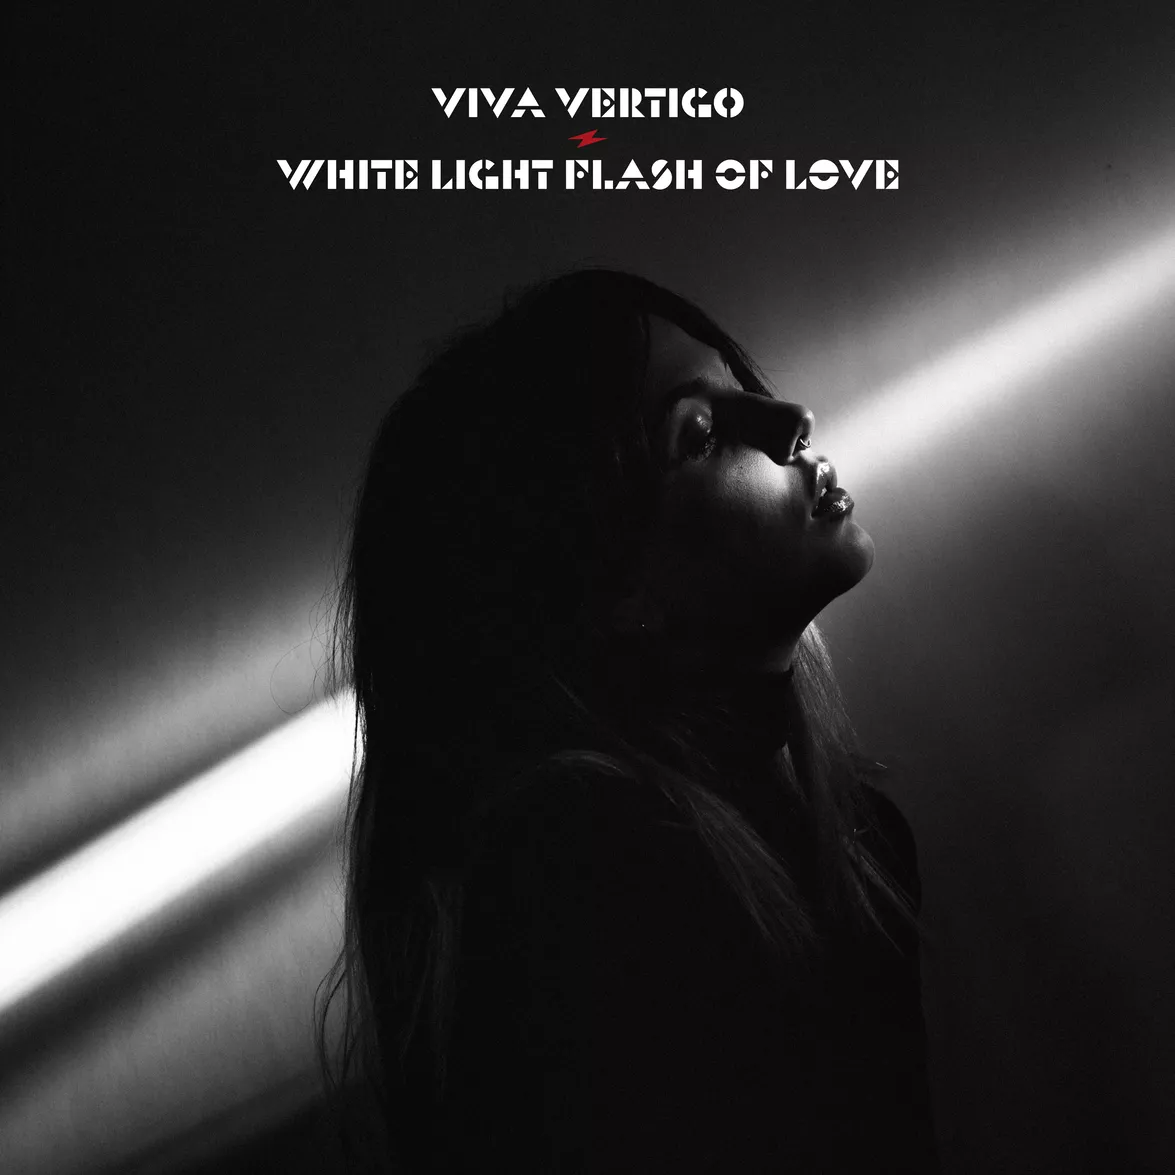 White Light Flash of Love - Viva Vertigo